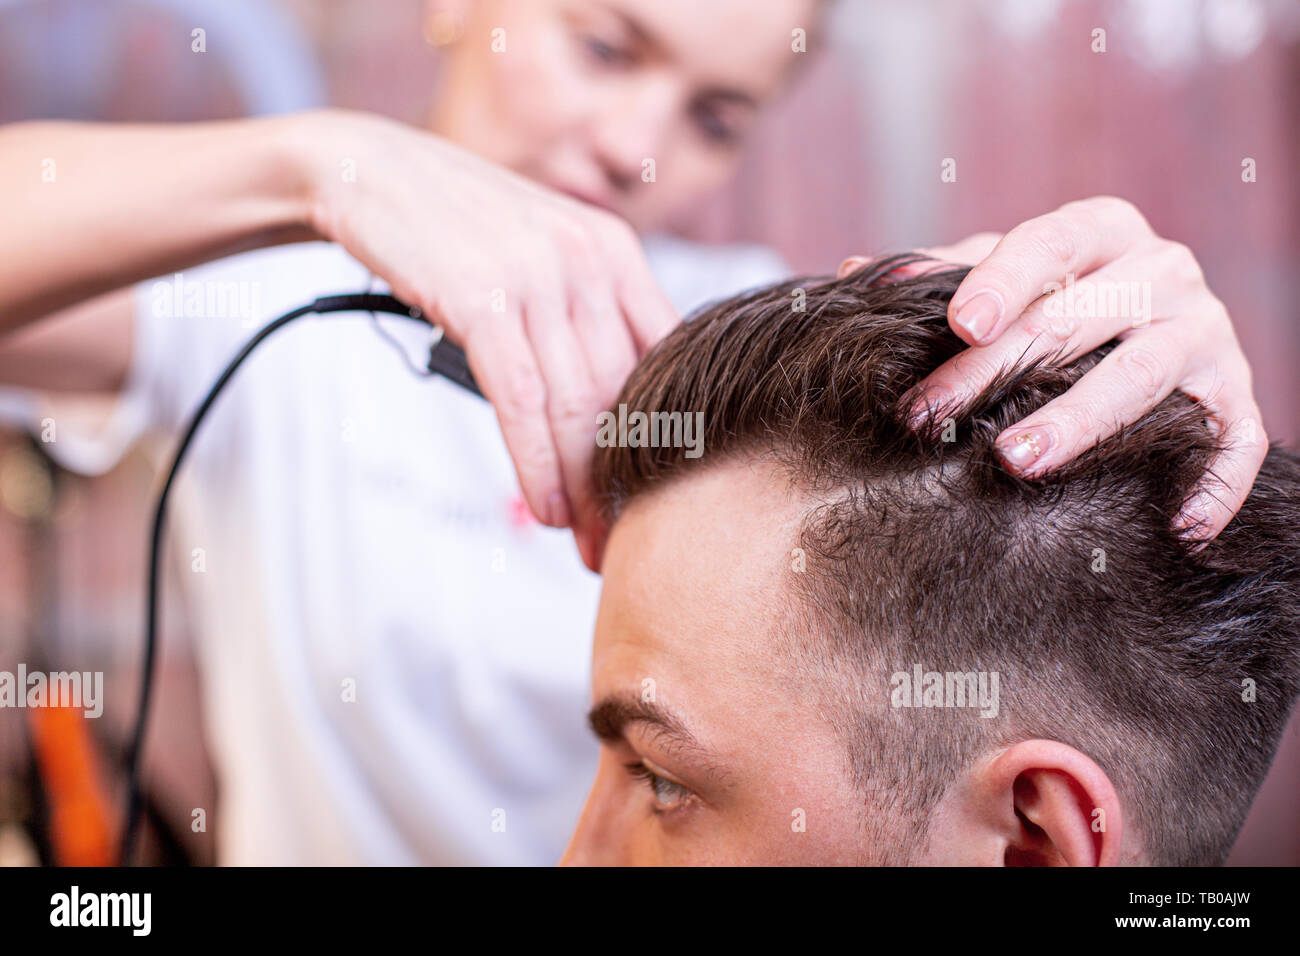 3846 Hair Cut Training Images Stock Photos  Vectors  Shutterstock